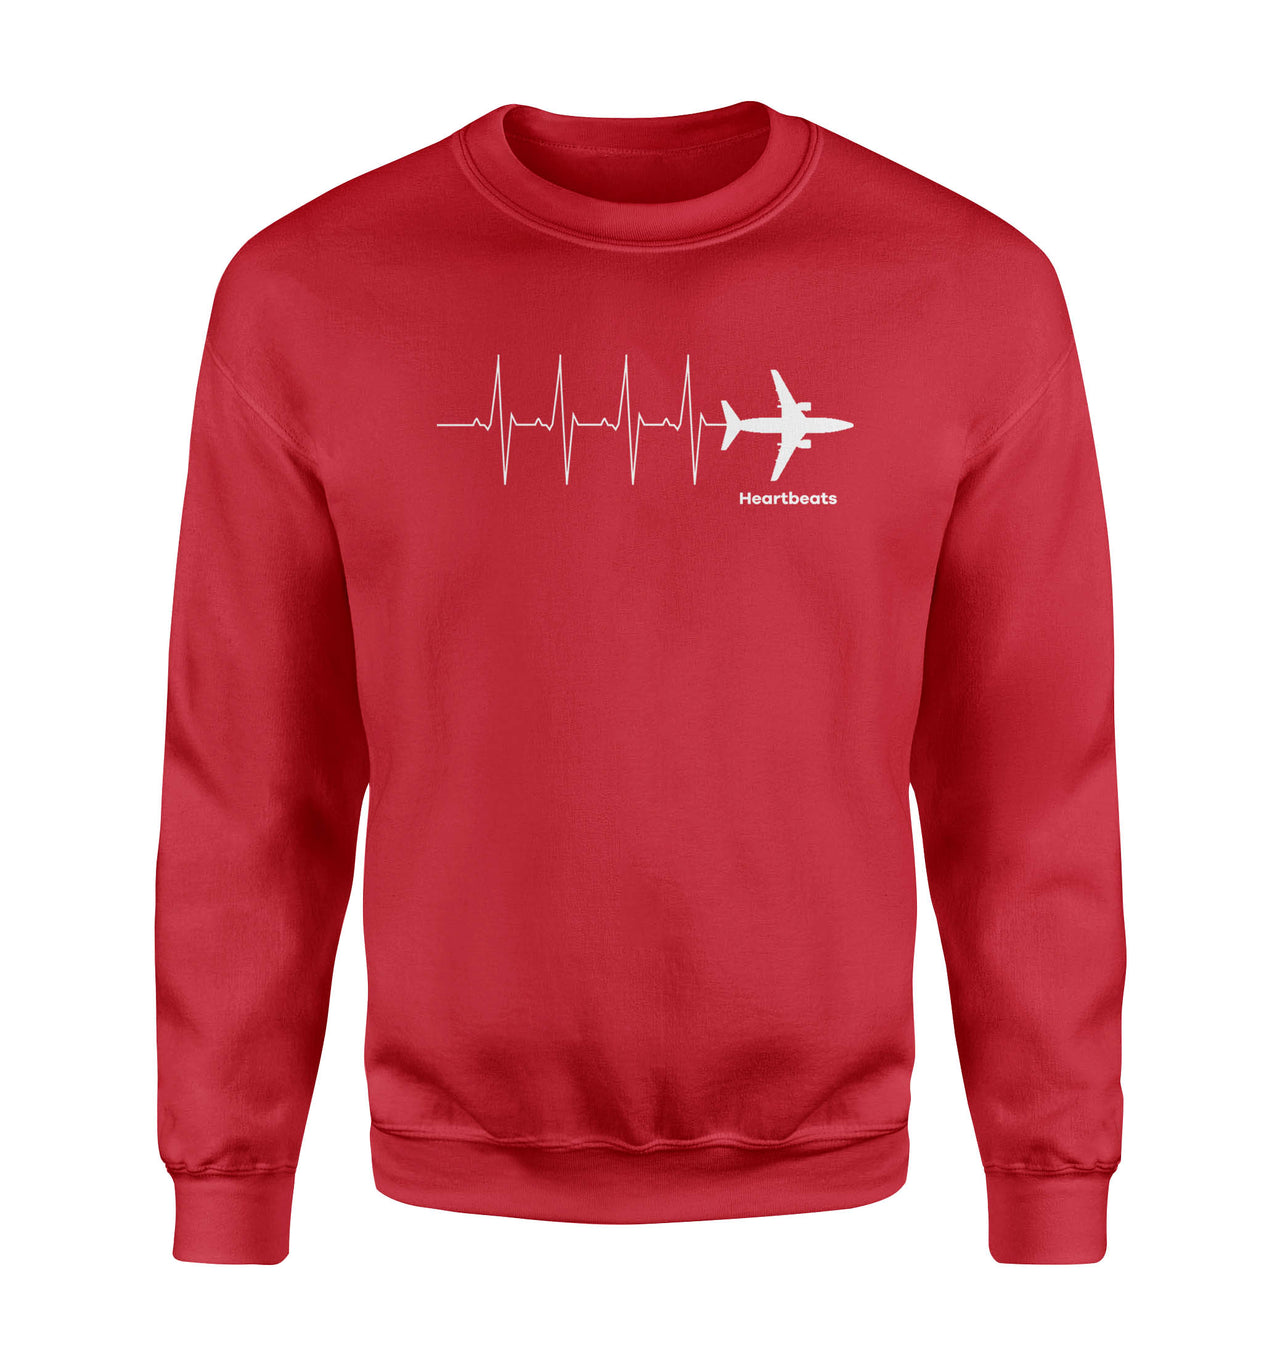 Aviation Heartbeats Designed Sweatshirts